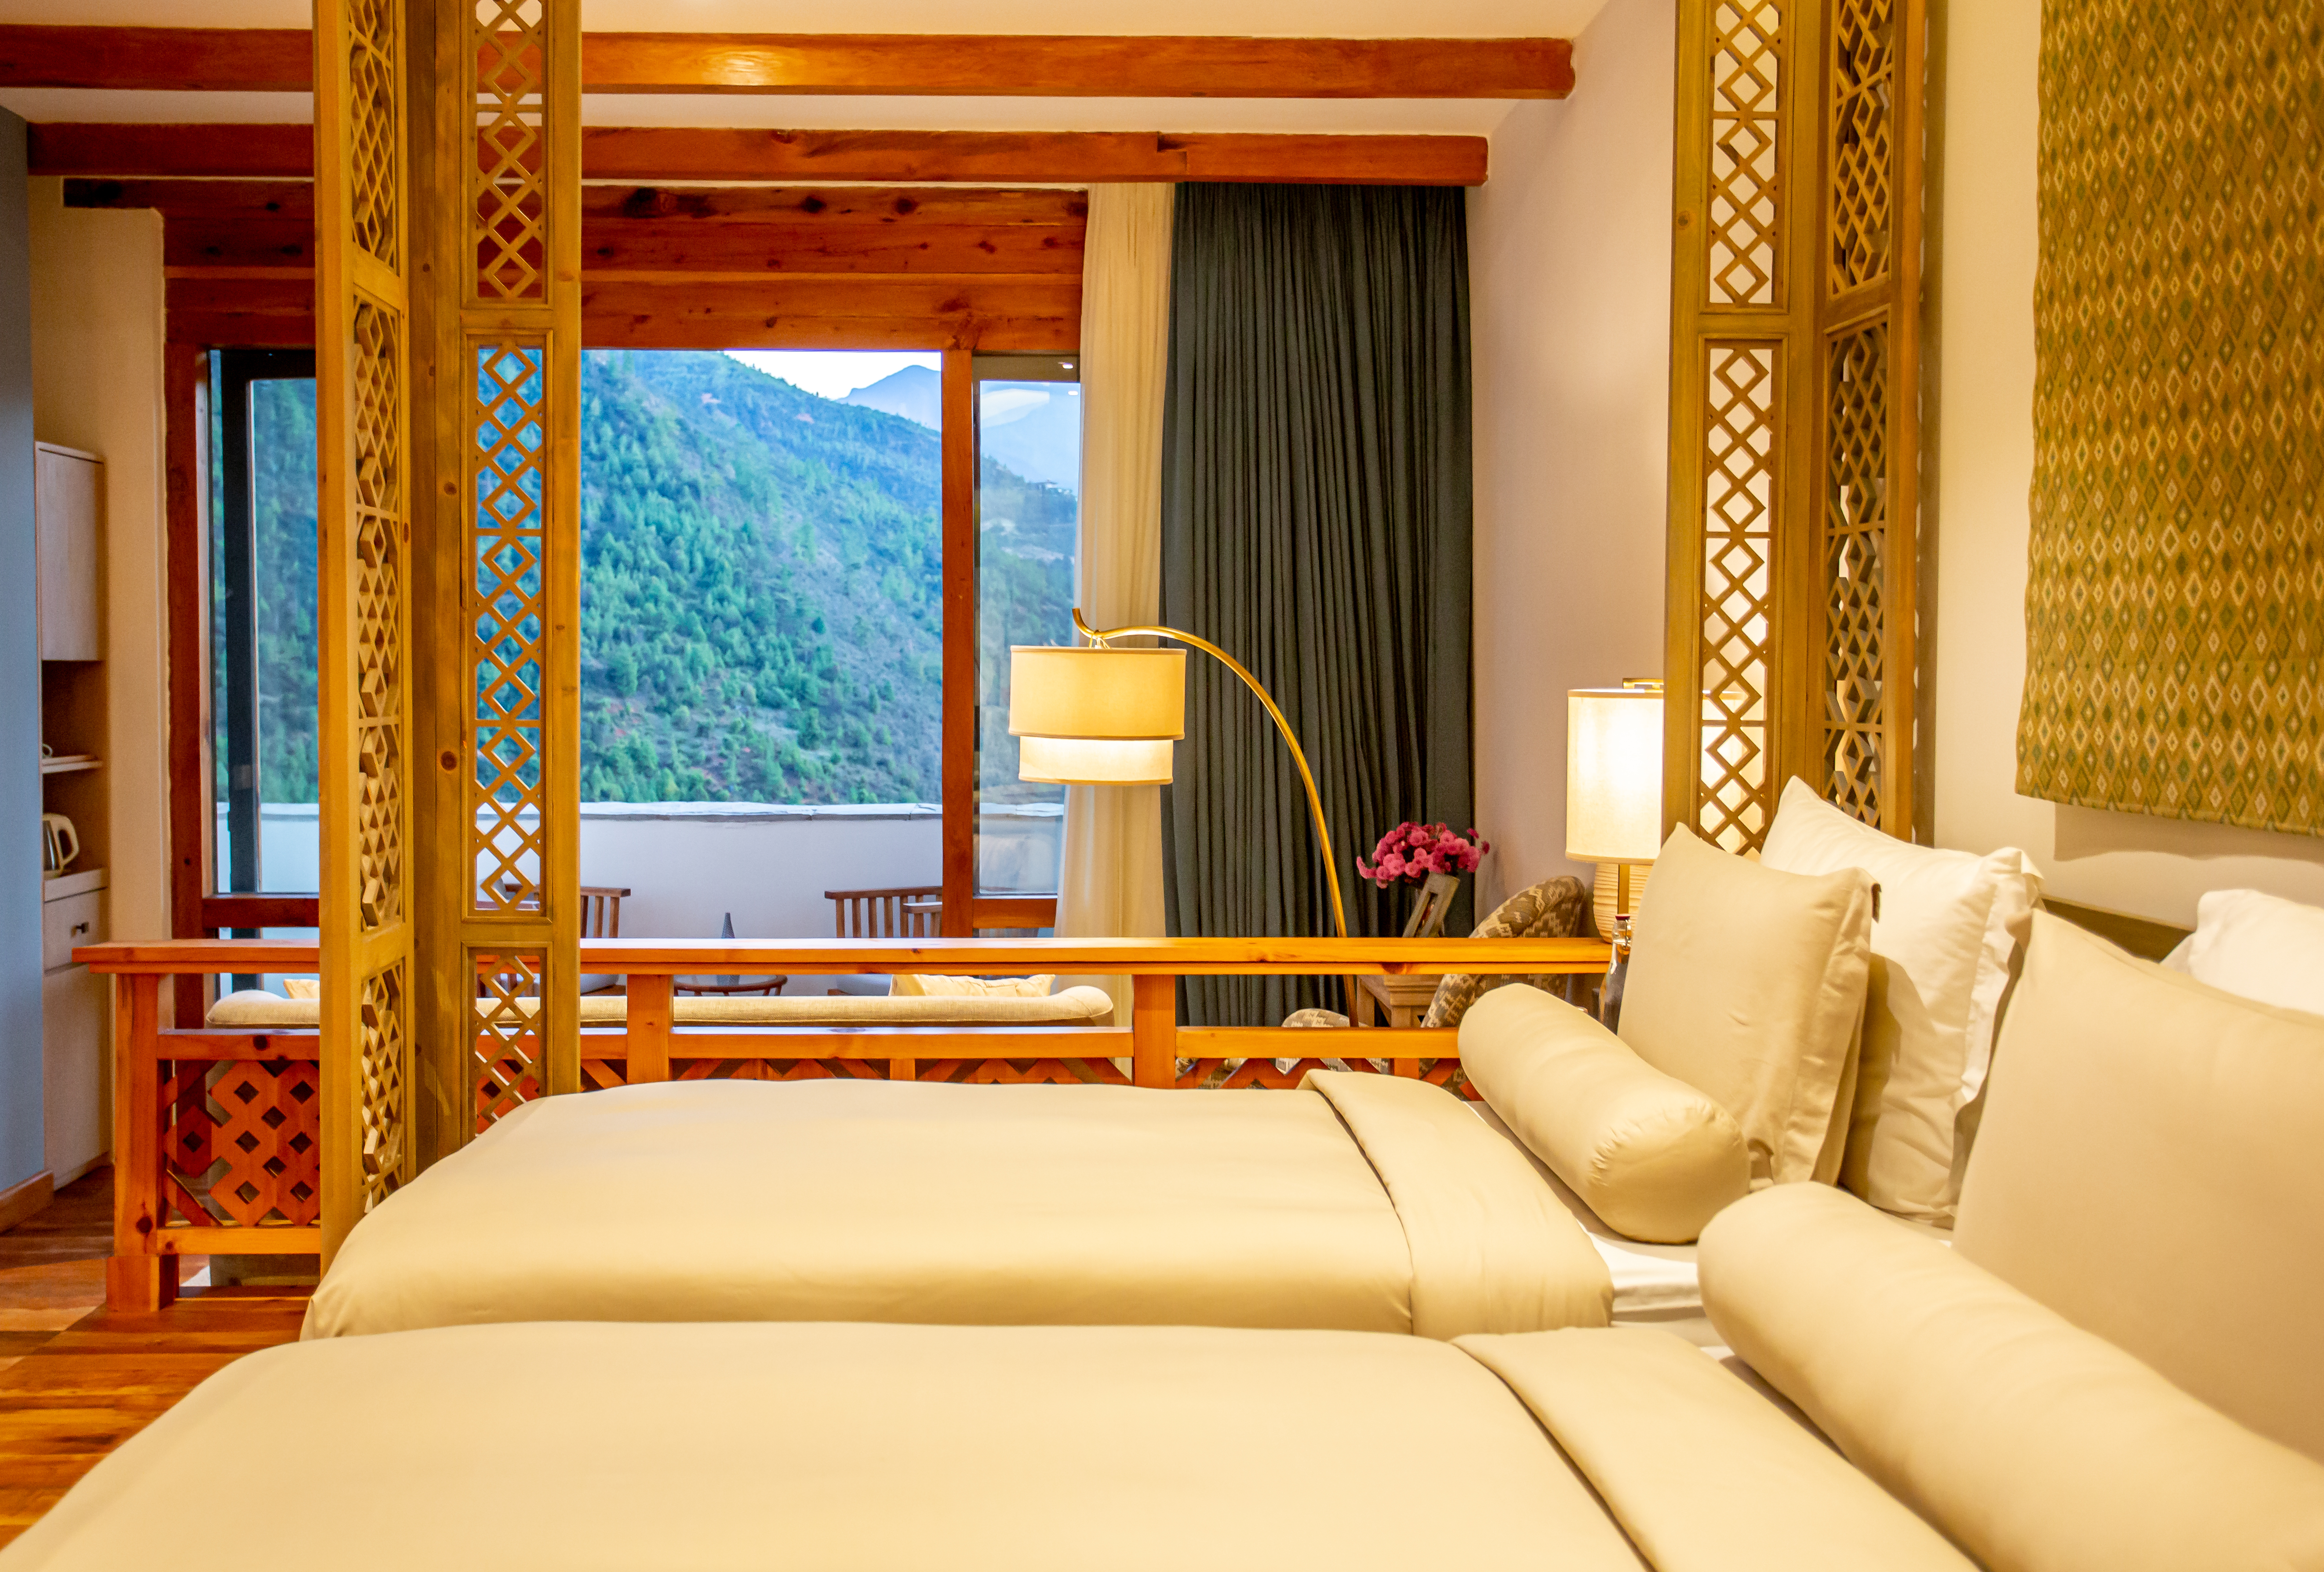 Balcony room at bhutan spirit sanctuary